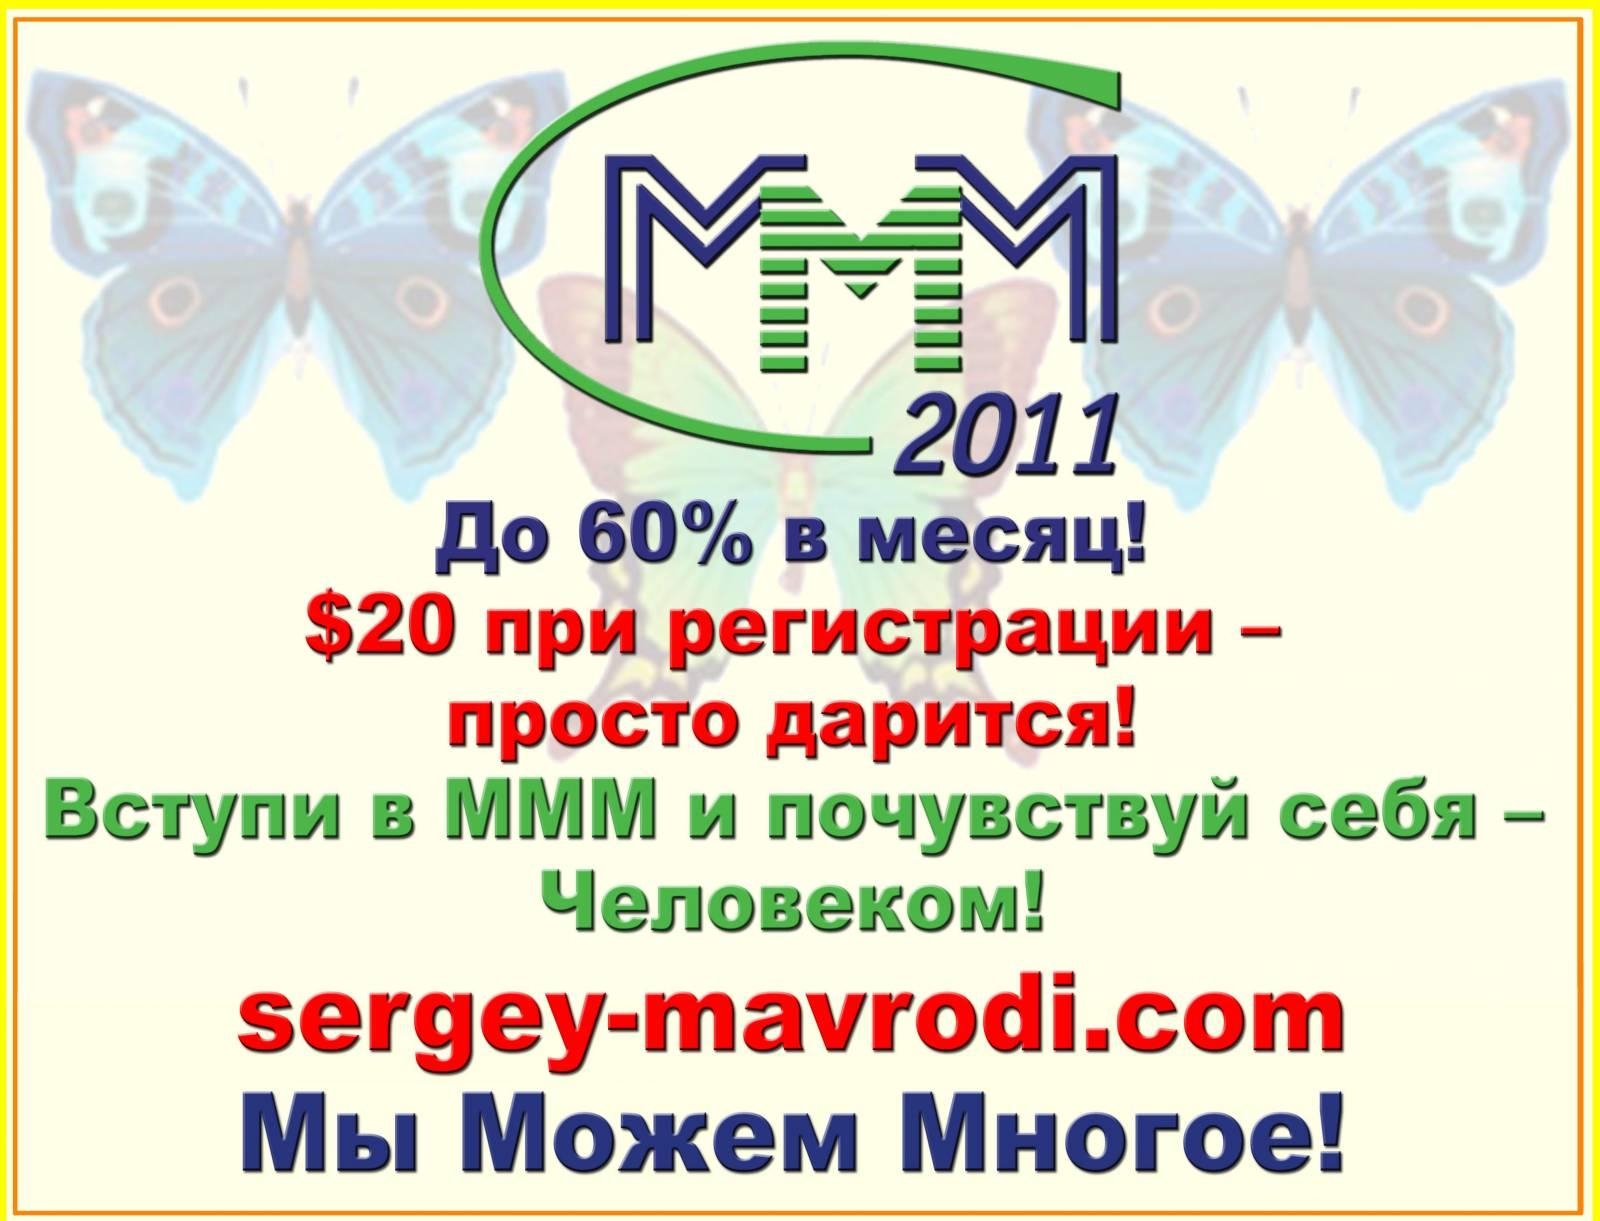 Реклама МММ 2011